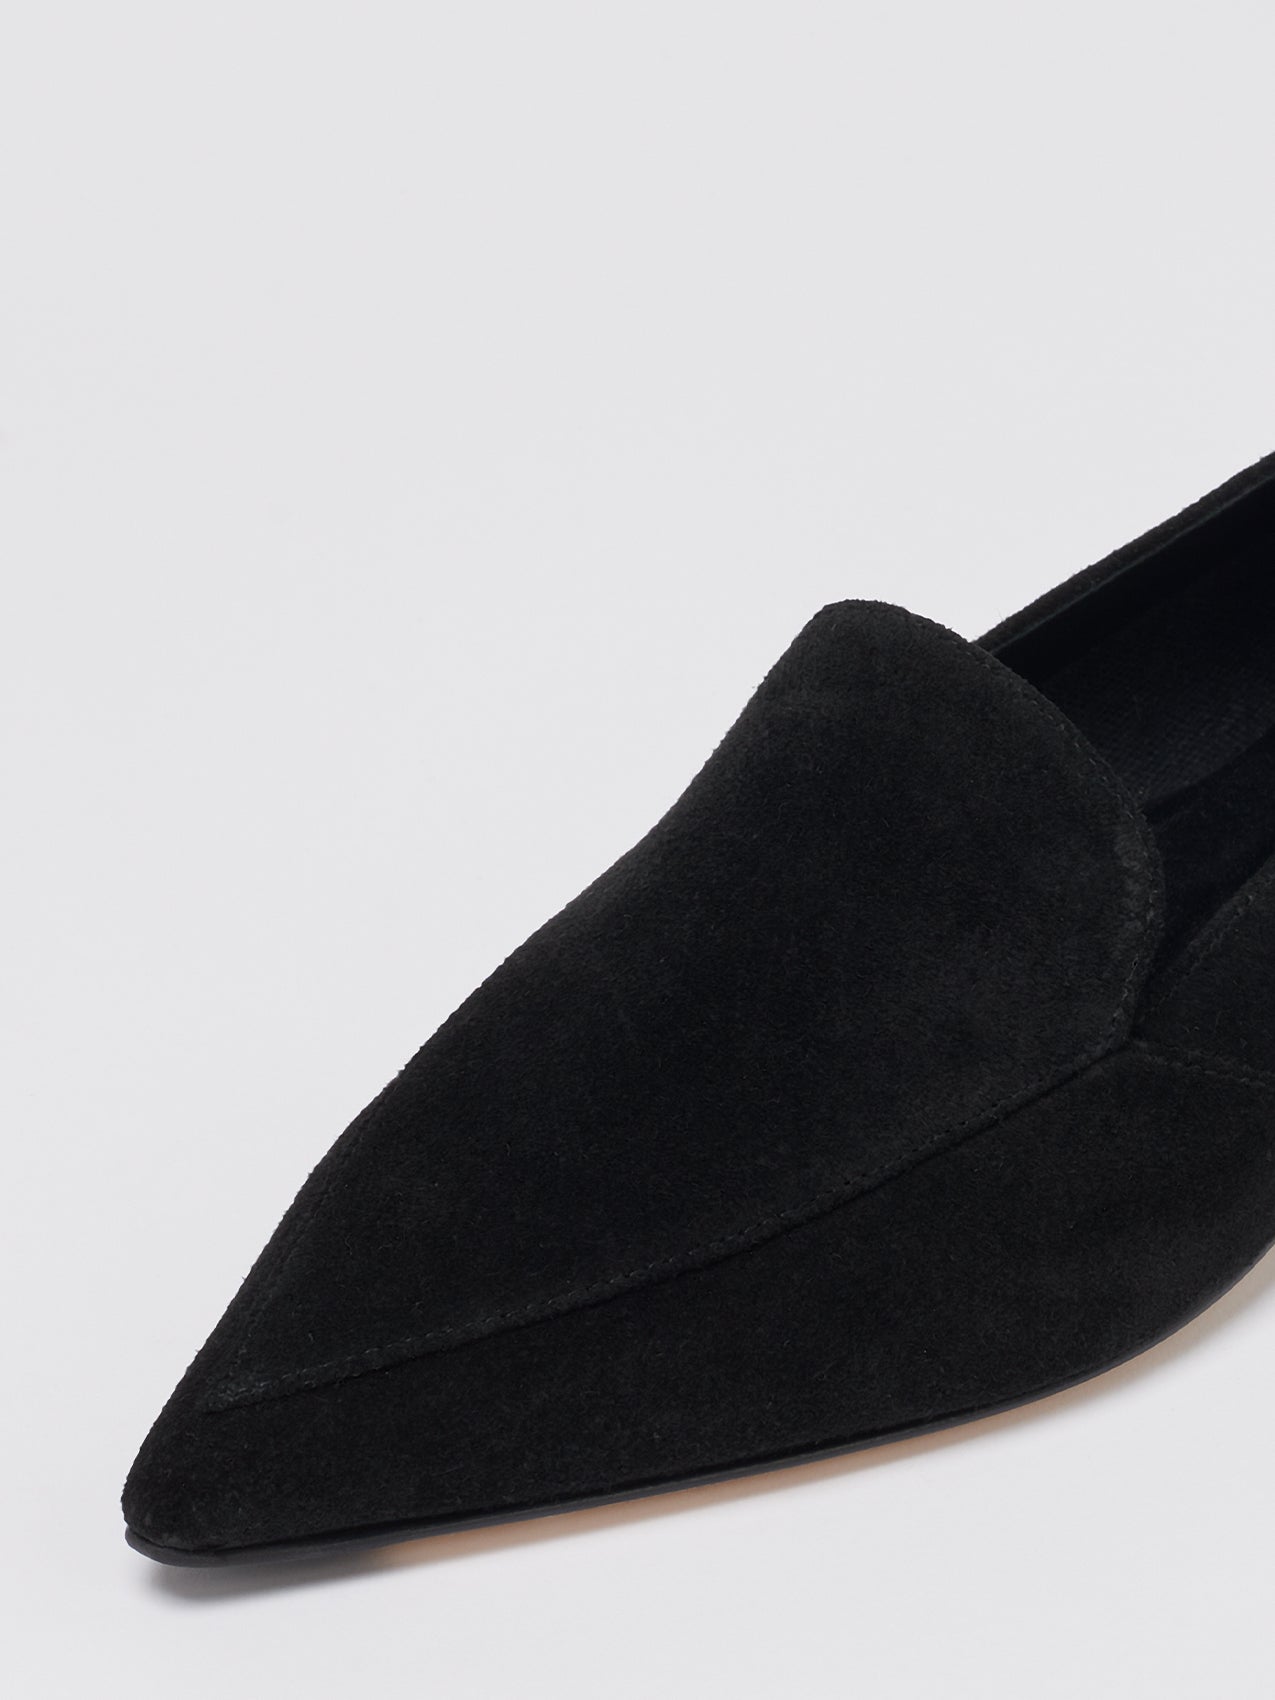 Aeyde | MARTHA Black Pointed Toe Loafer